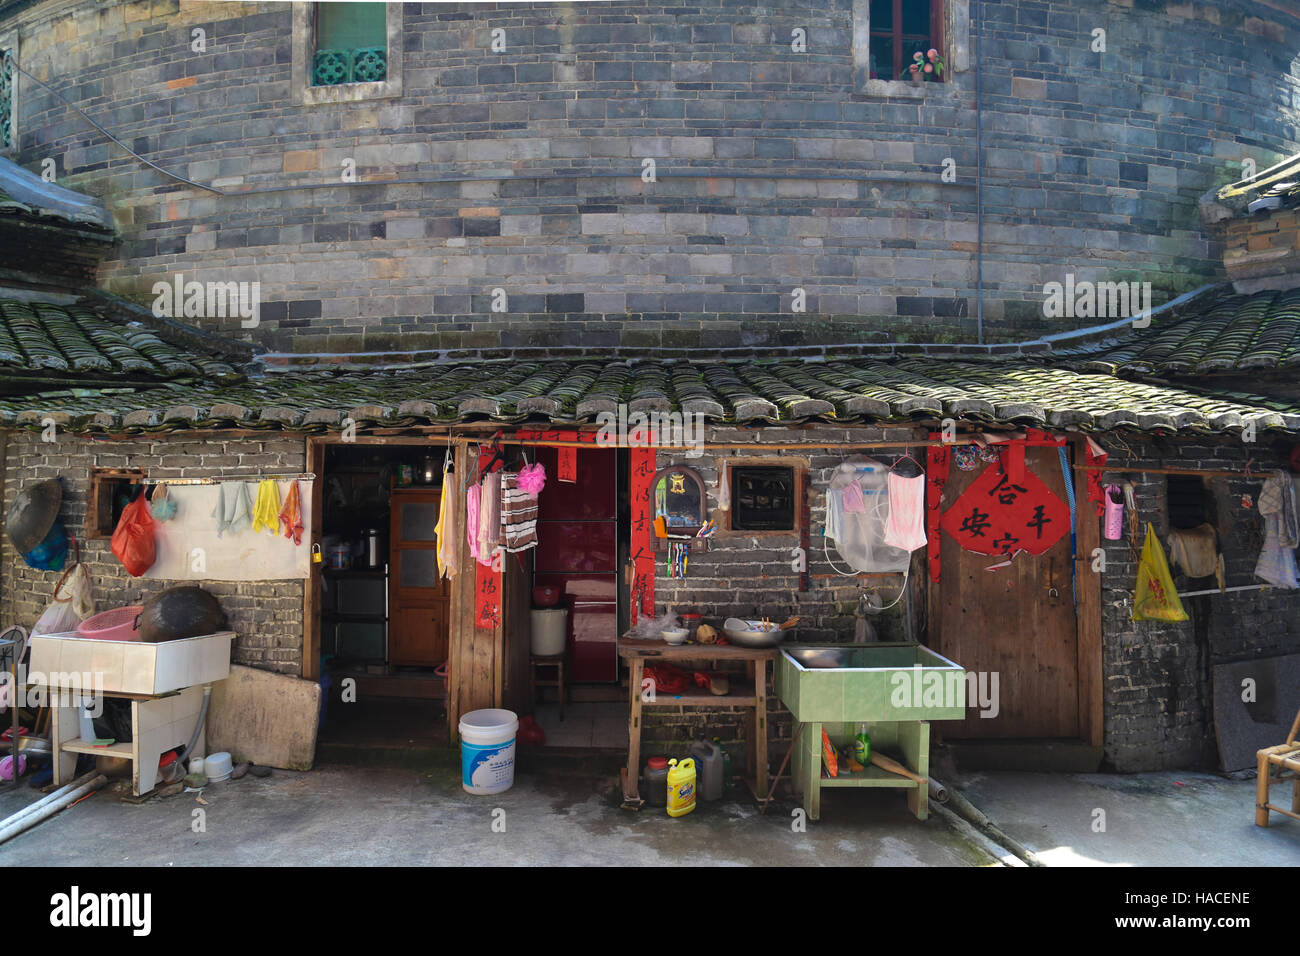 Kitchen area of Fujian earthen building (Tulou) cultural village at Yongding town, Fujian china. Stock Photo